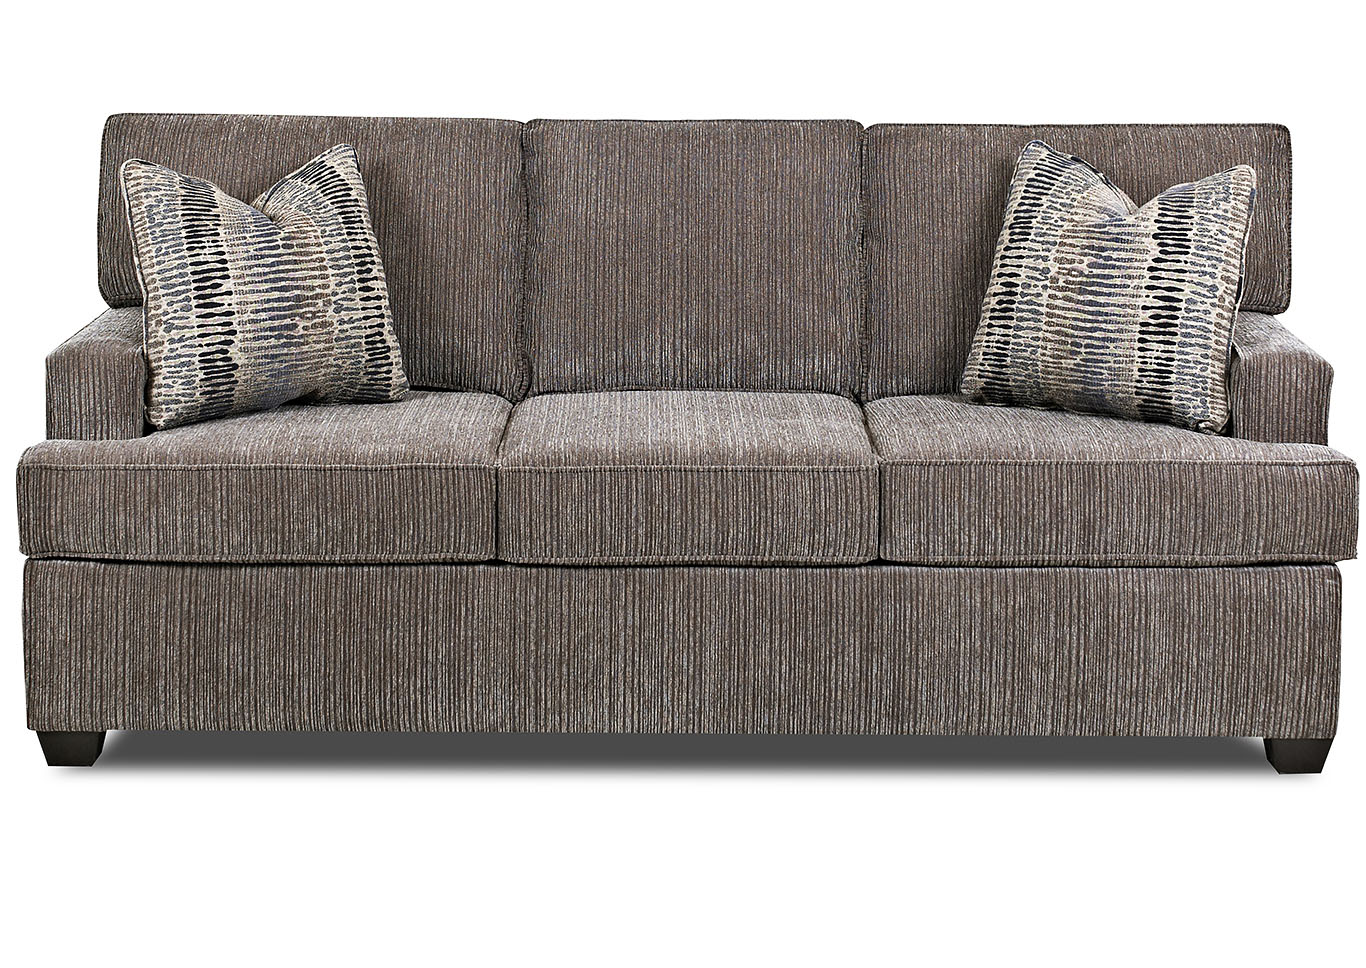 Cruze Dark Brown Stationary Fabric Sofa,Klaussner Home Furnishings